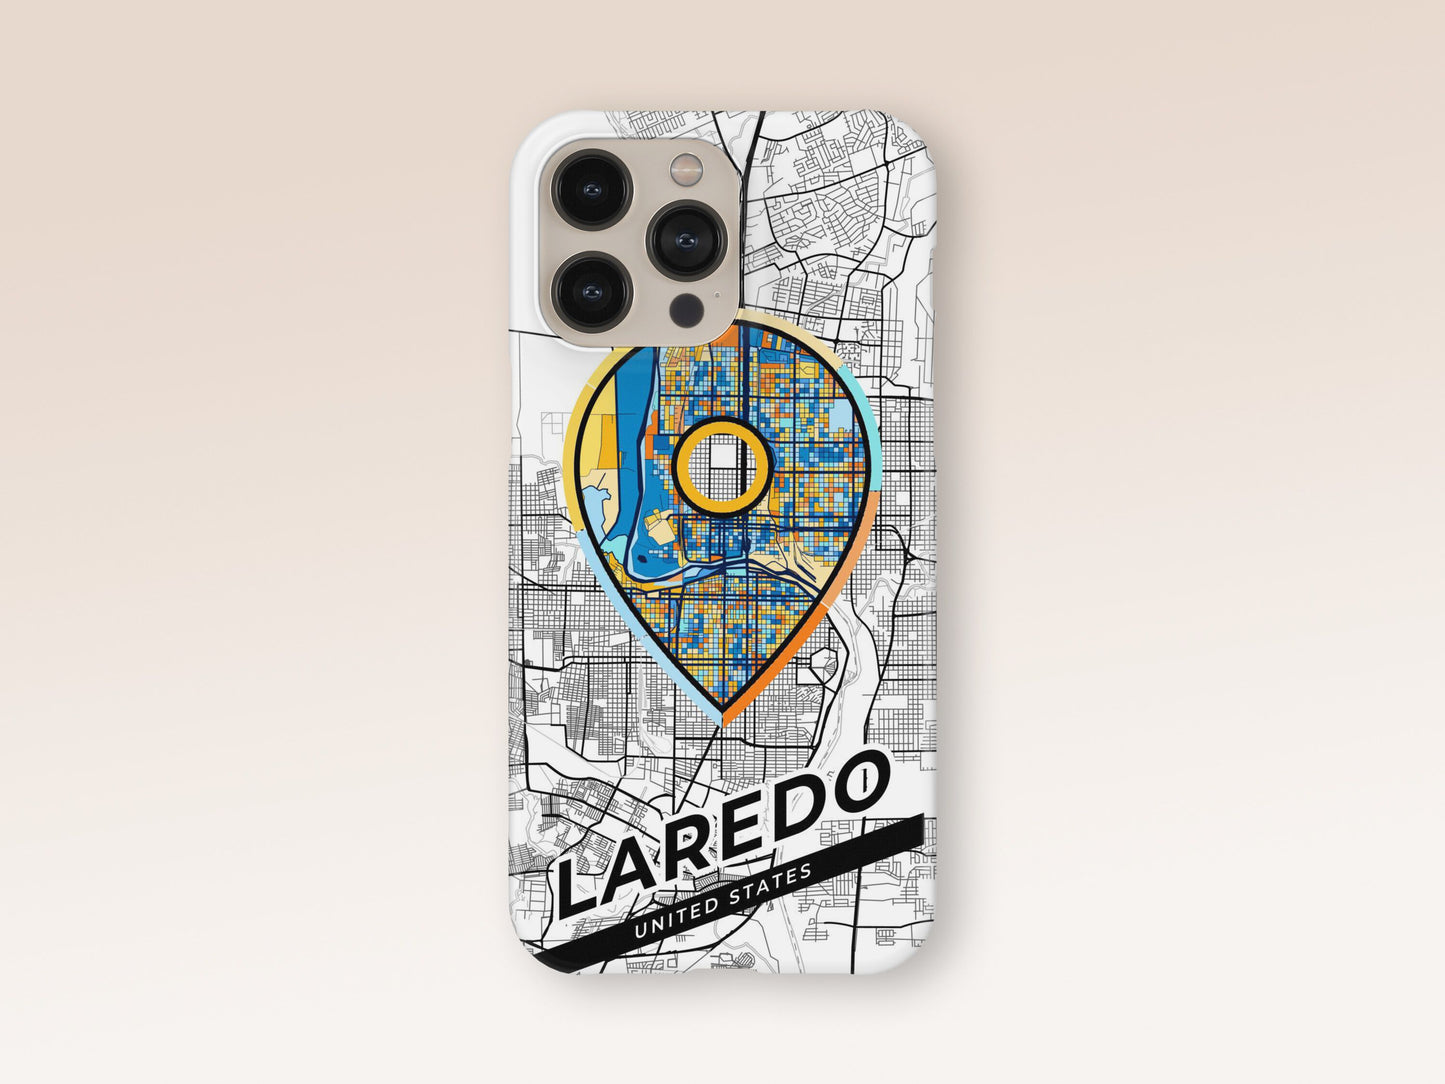 Laredo Texas slim phone case with colorful icon. Birthday, wedding or housewarming gift. Couple match cases. 1